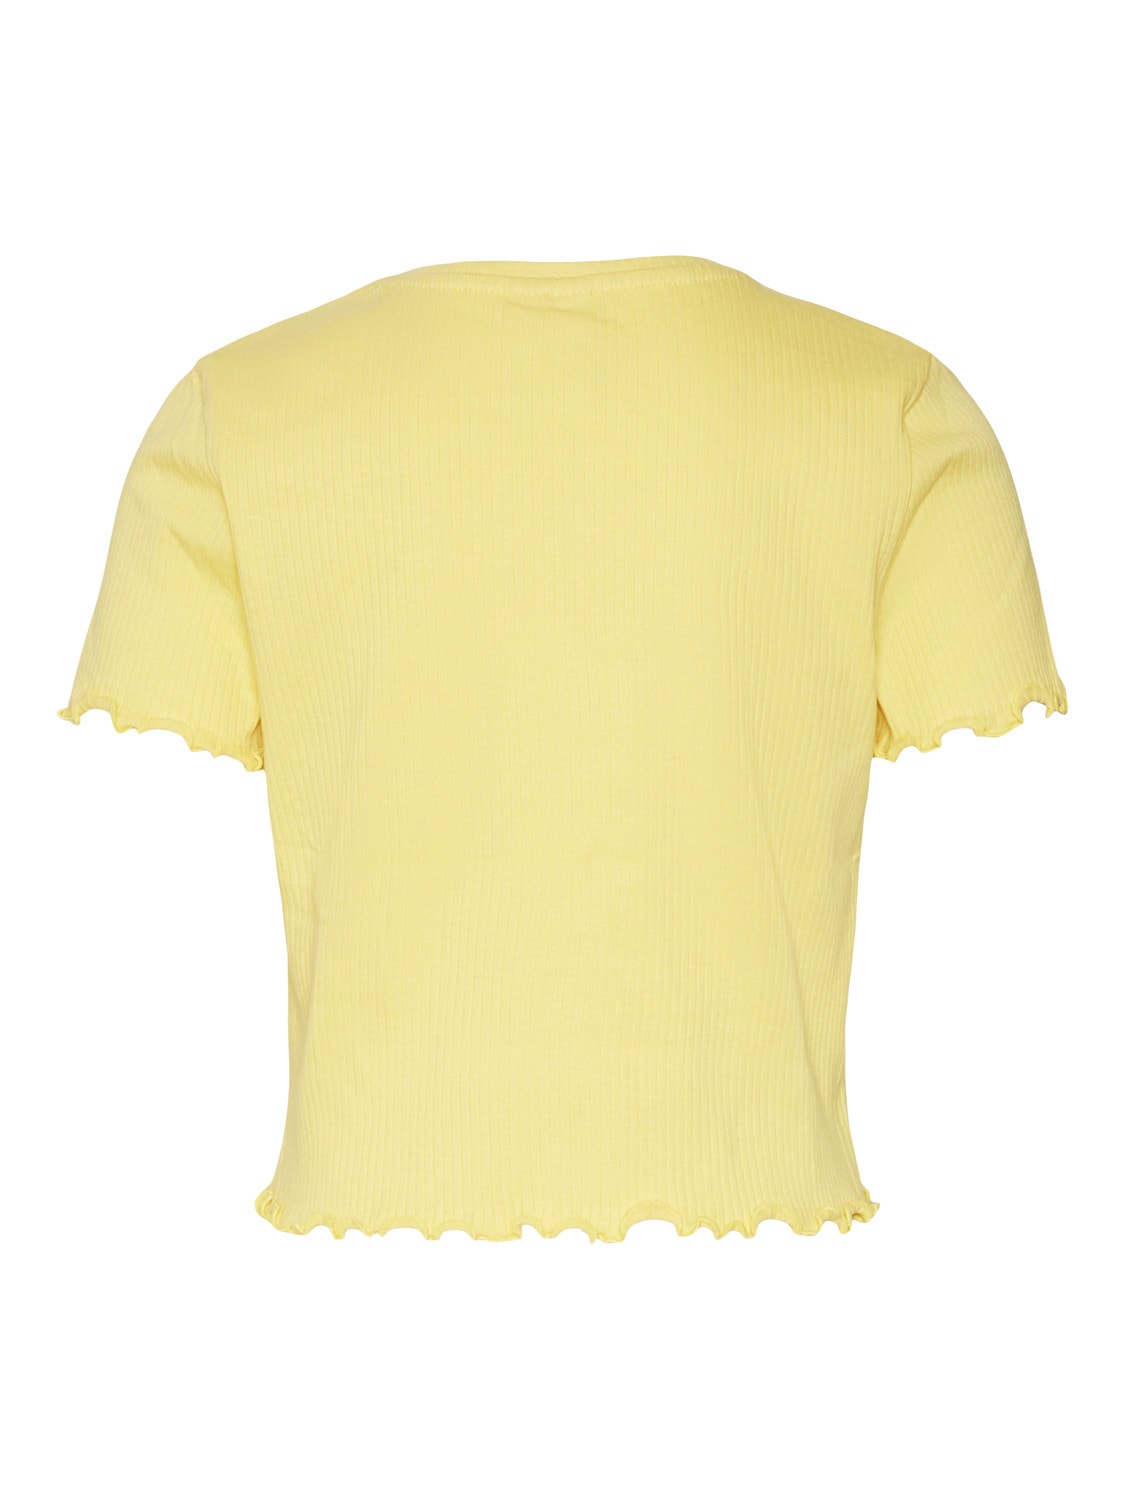 Vero Moda VMLAVENDER T-shirts -Lemon Zest - 10285290